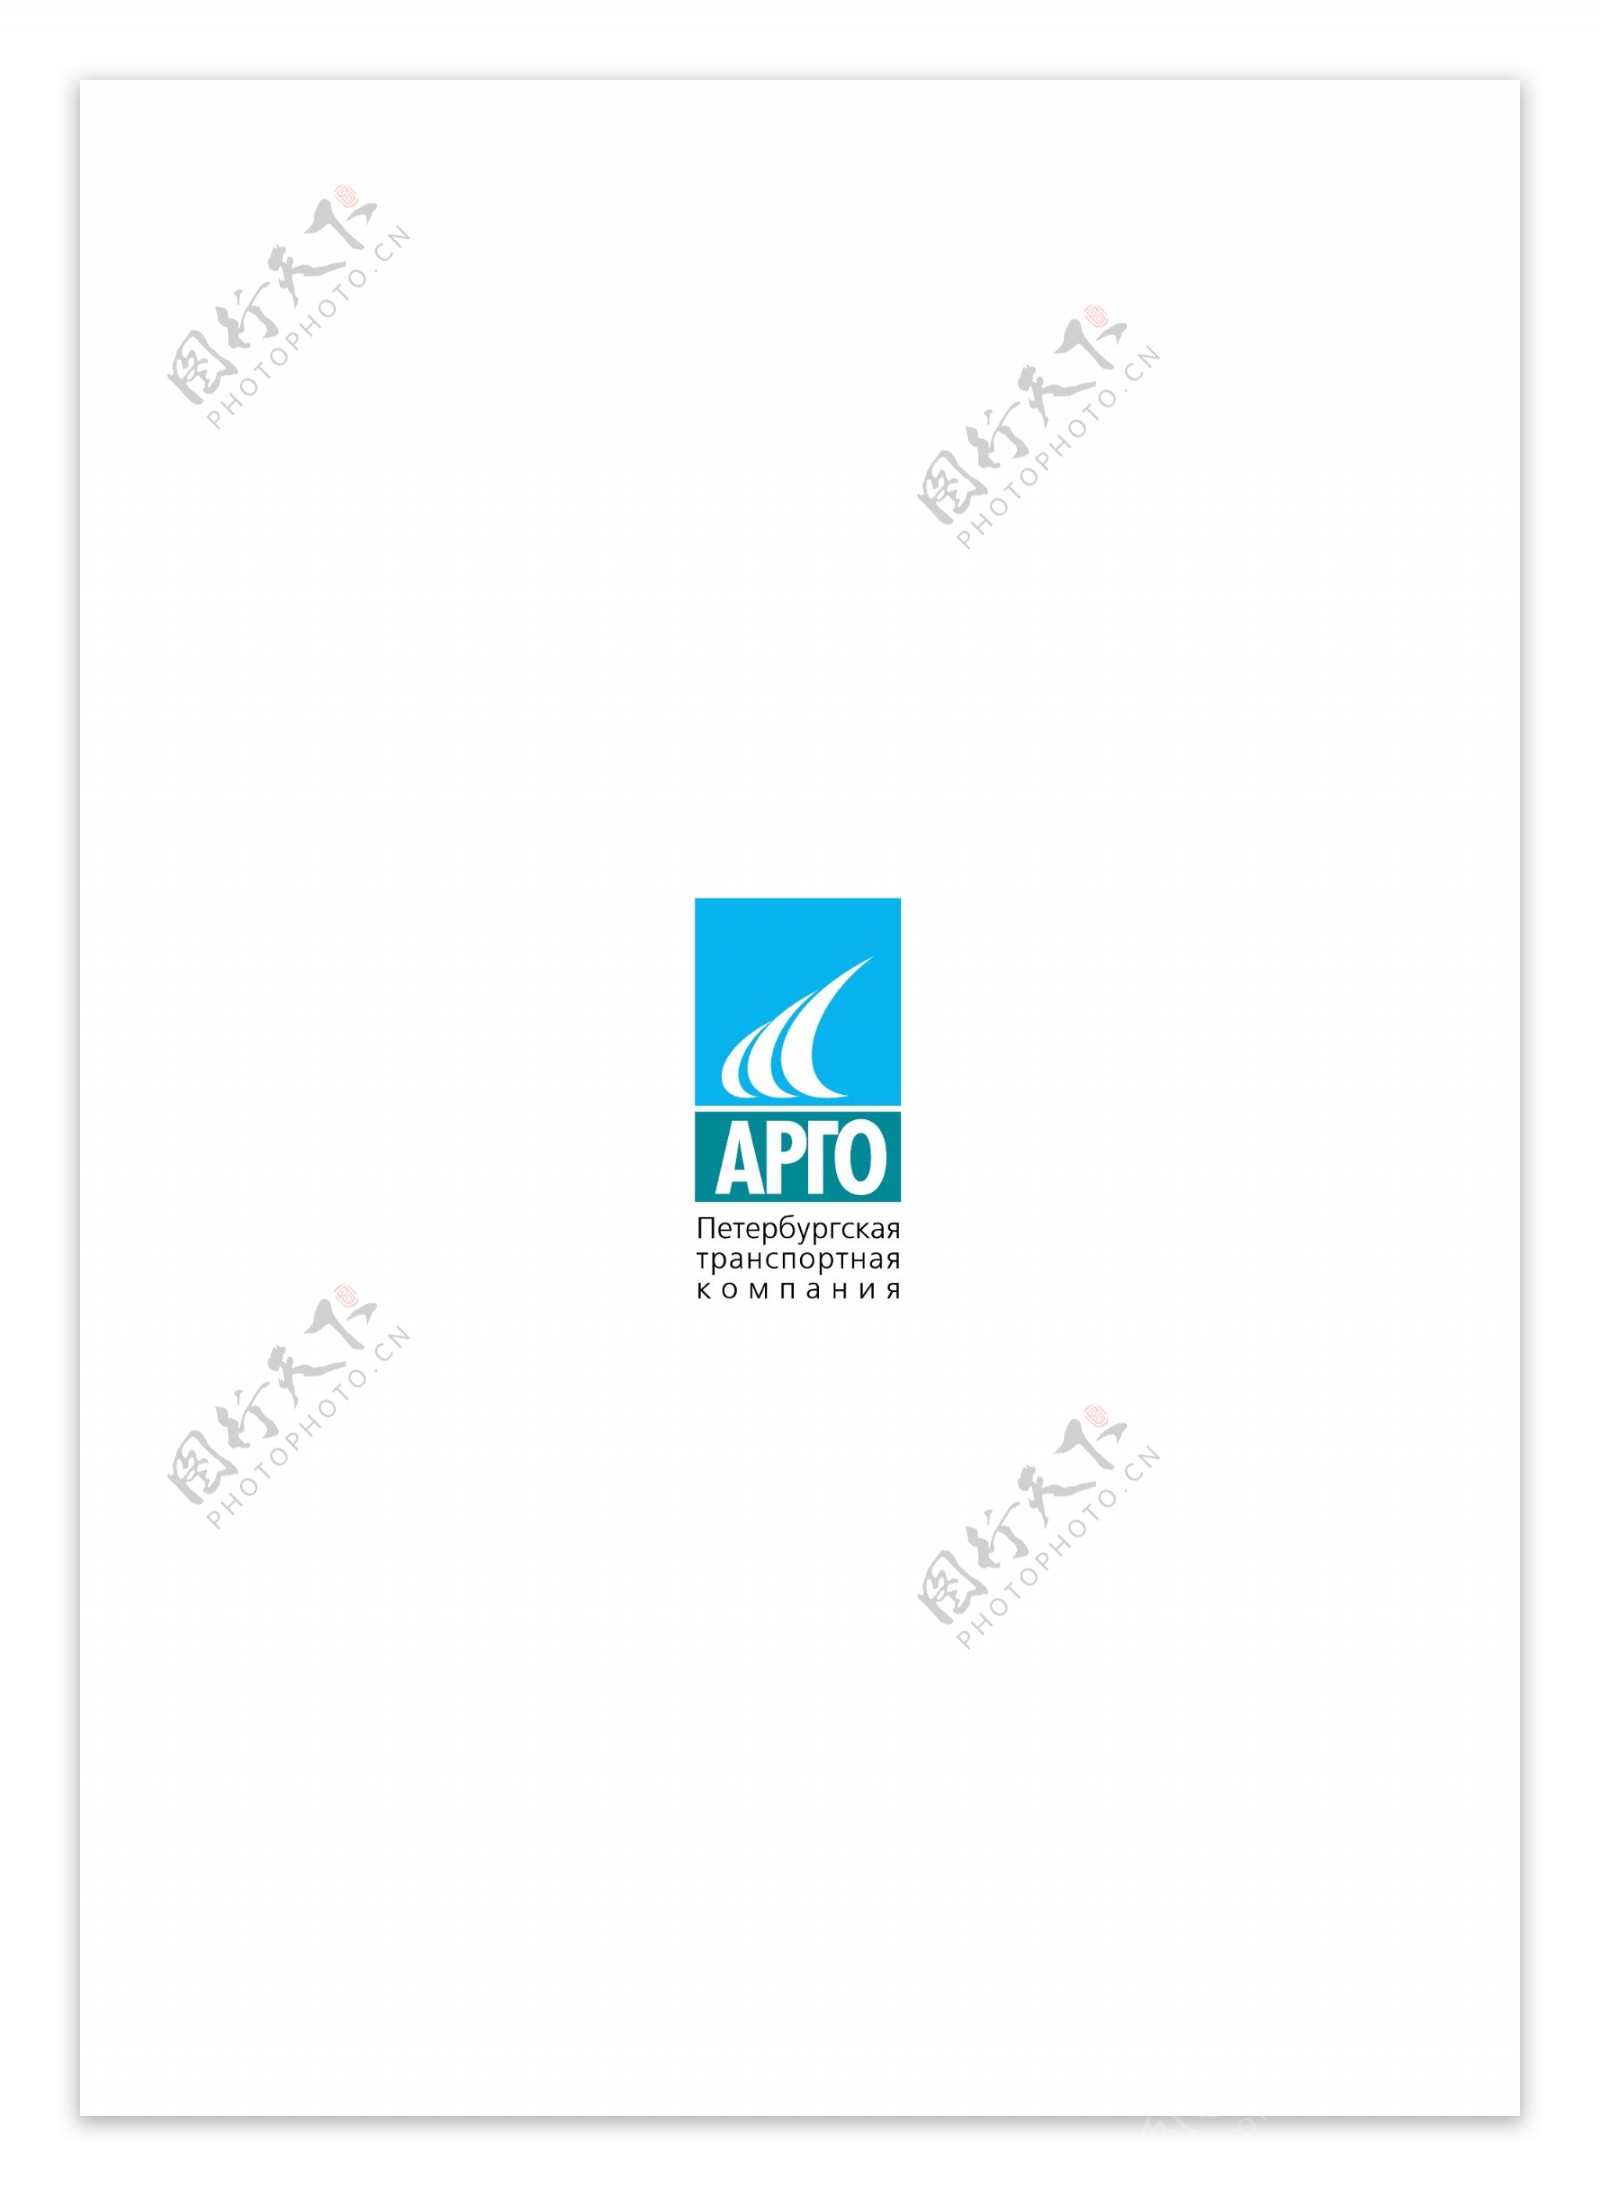 Argologo设计欣赏Argo航空运输标志下载标志设计欣赏